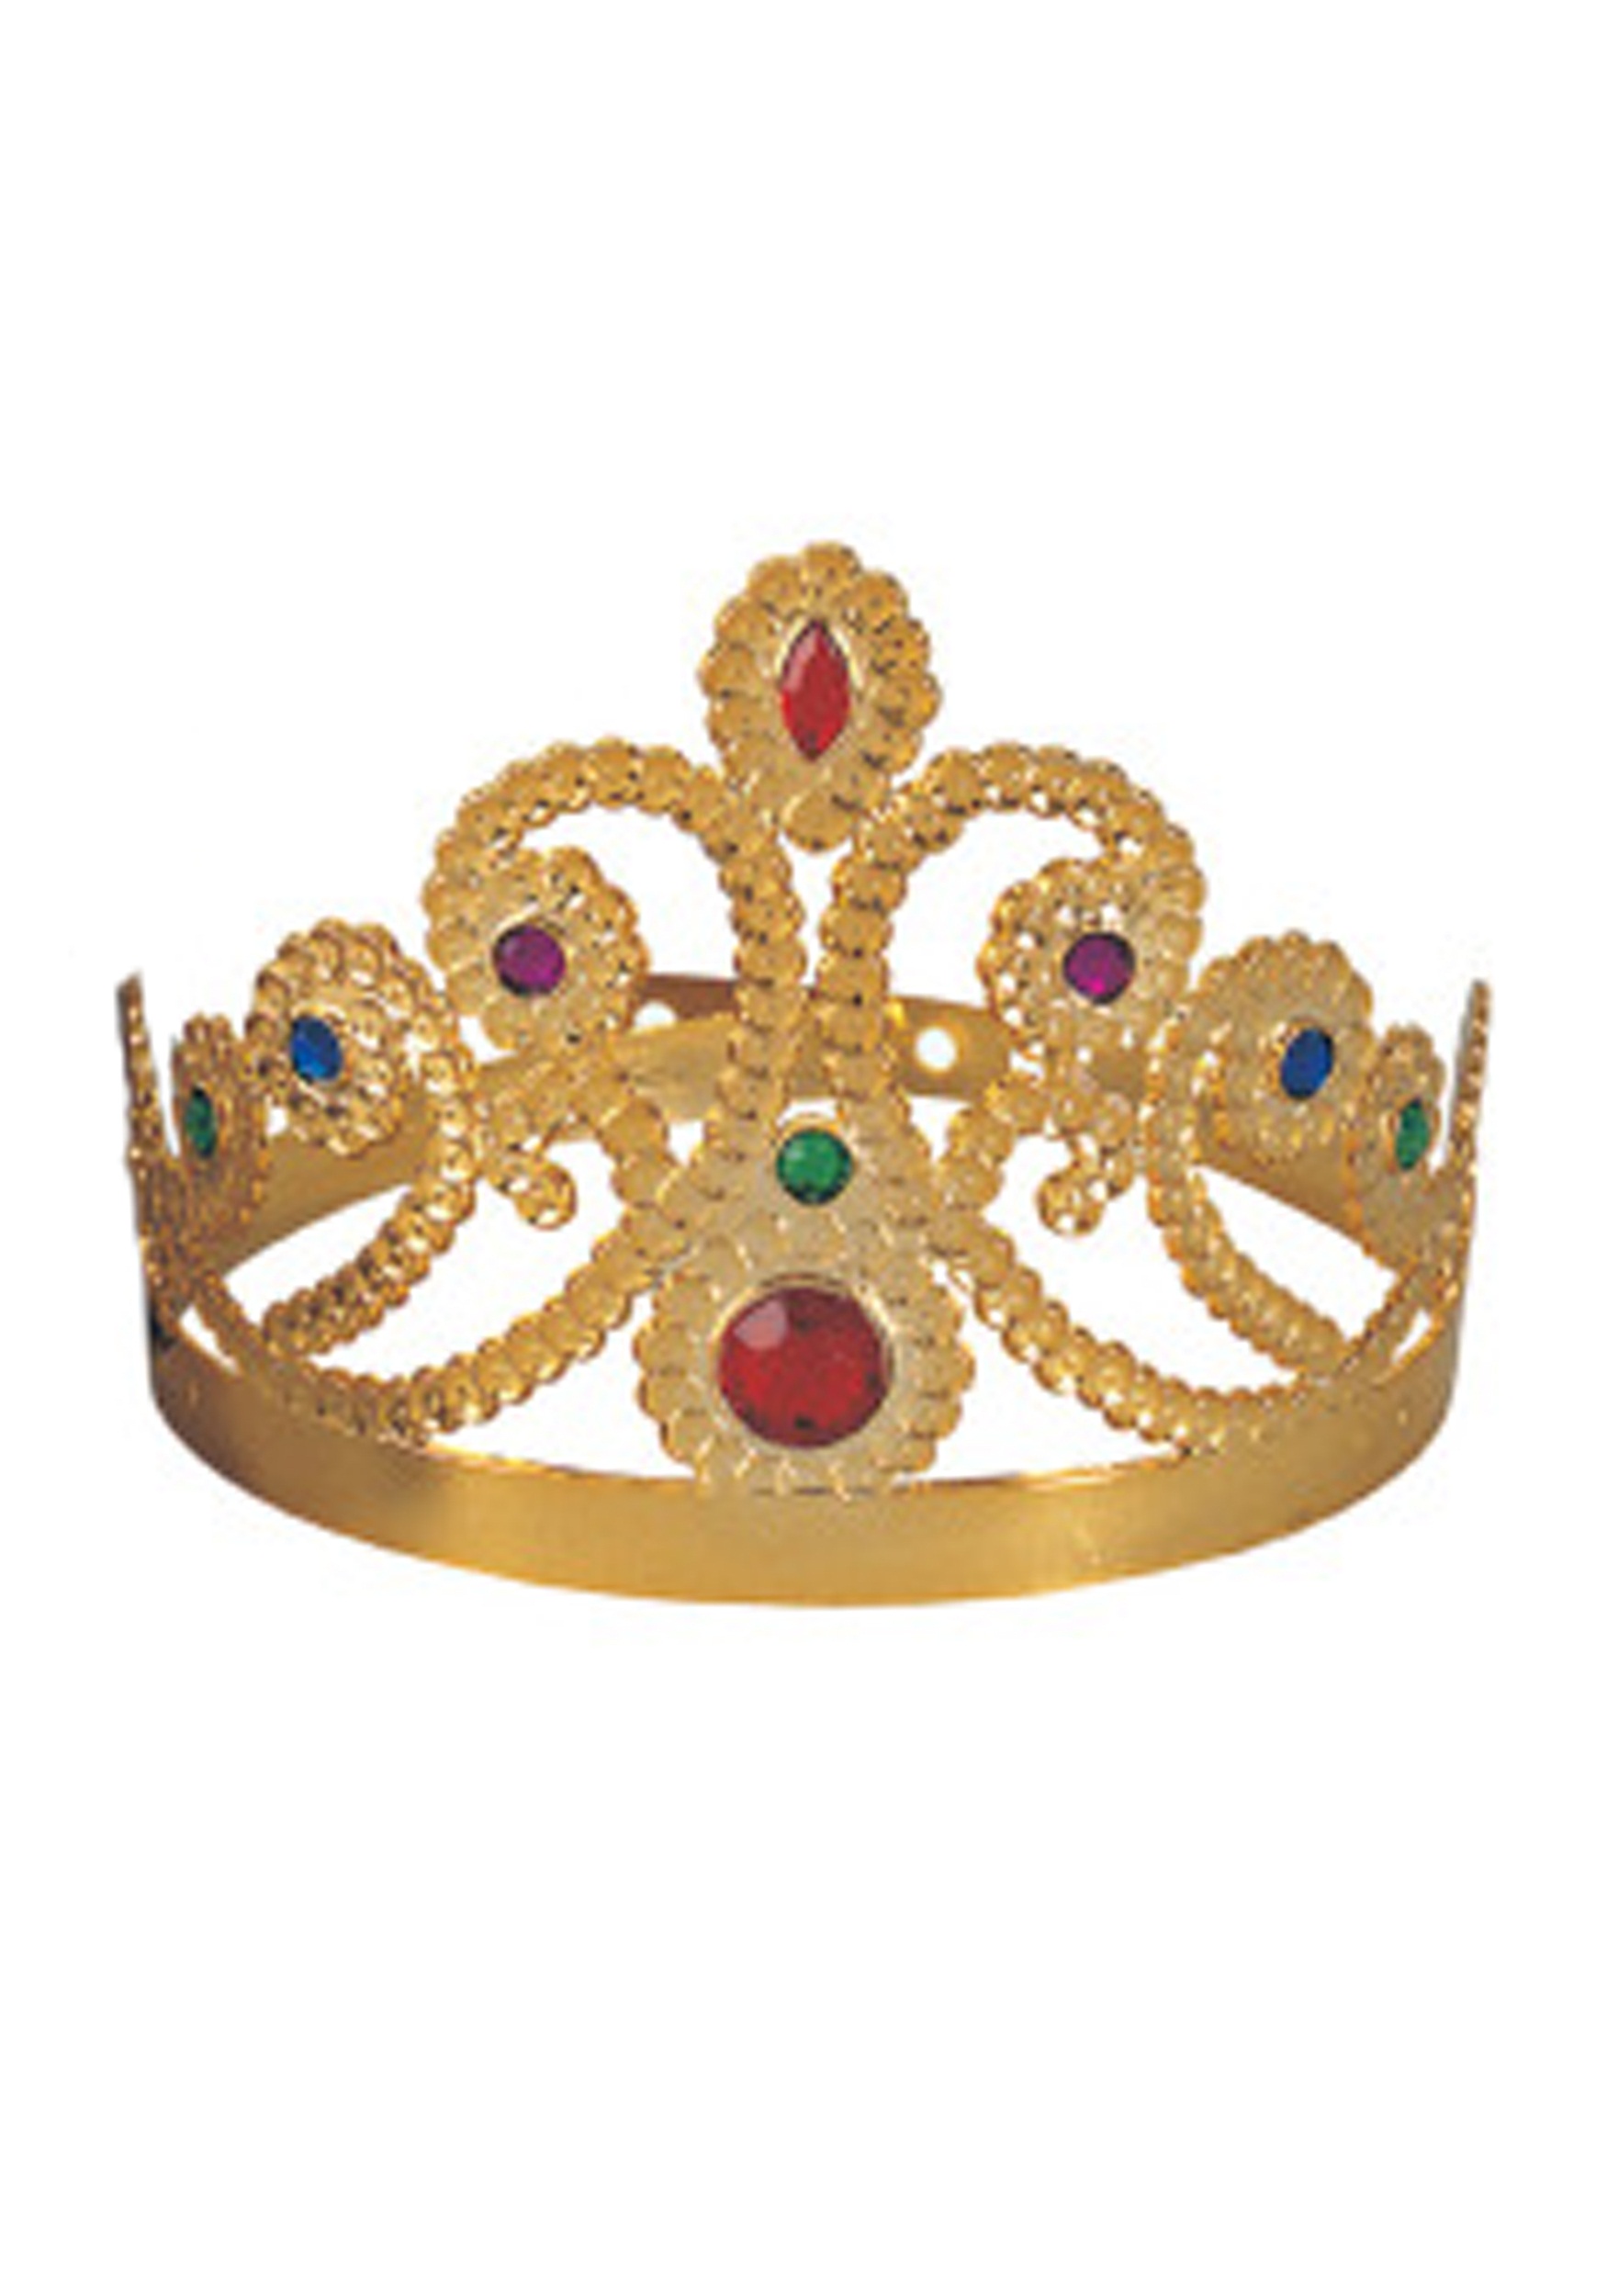 Gold Queen's Tiara Accessory